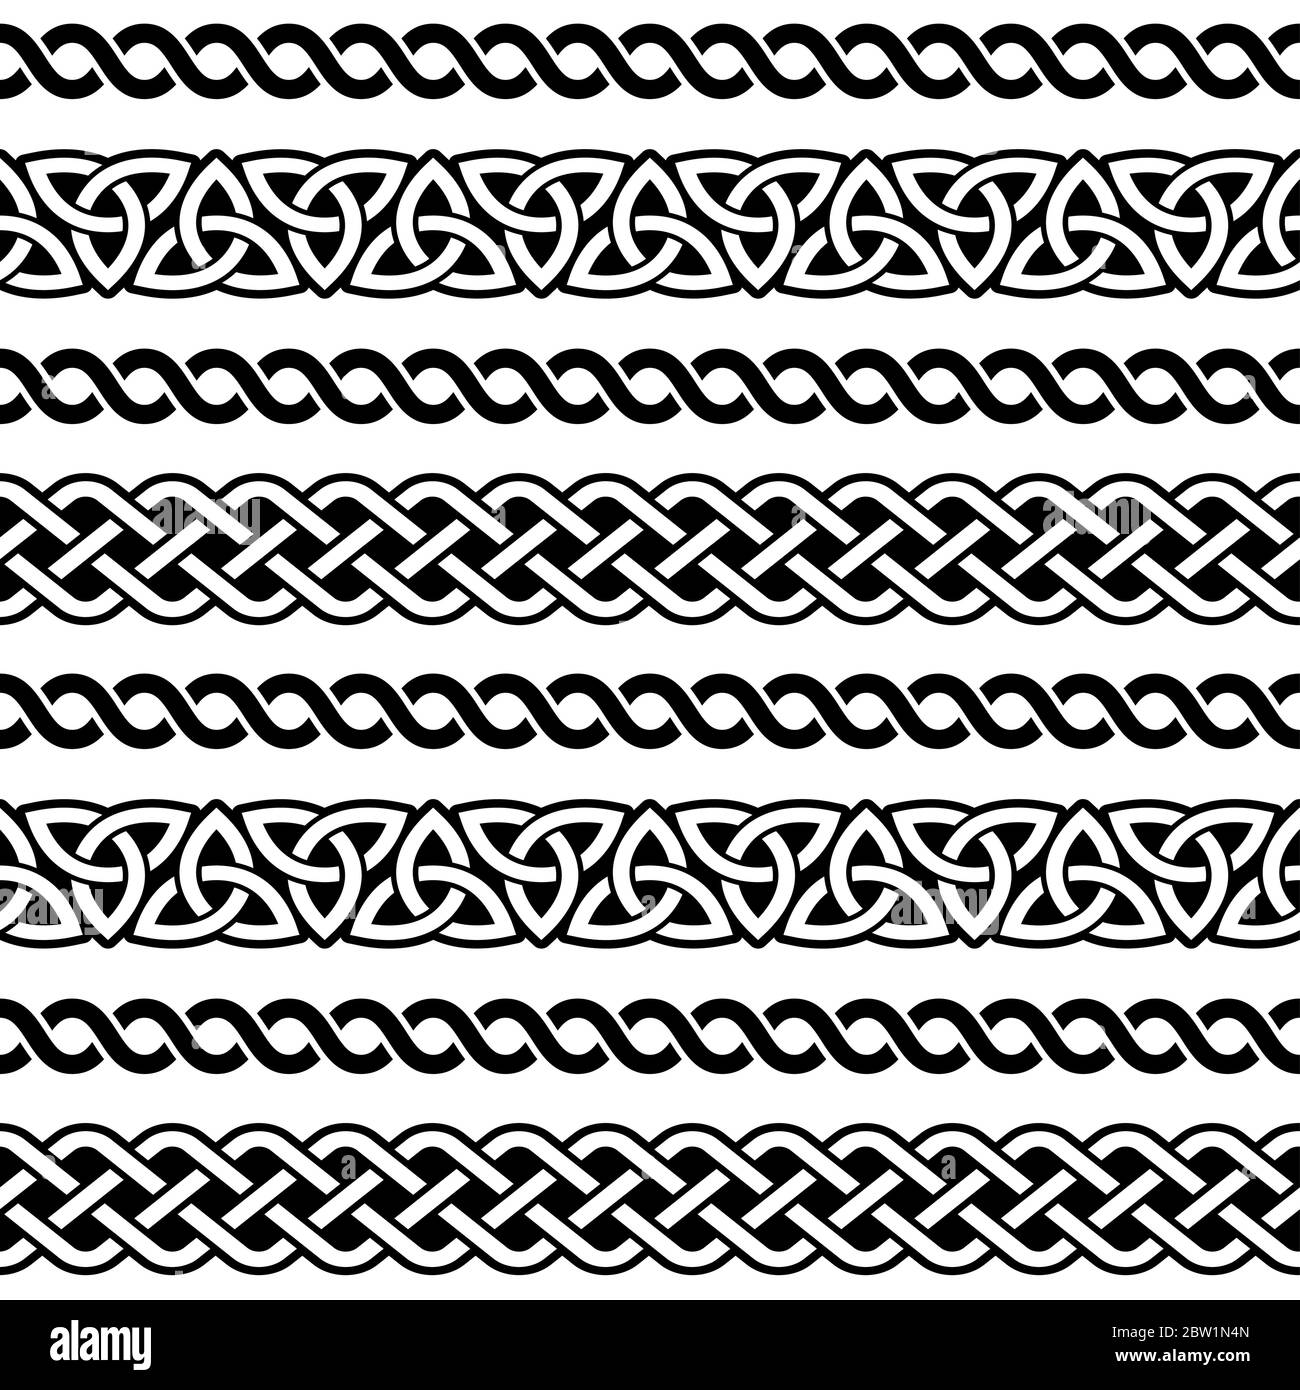 Irish Celtic nahtlose Vektor-Muster, geflochtene Rahmen Designs für Grußkarten, St. Patrick's Day Feier Stock Vektor